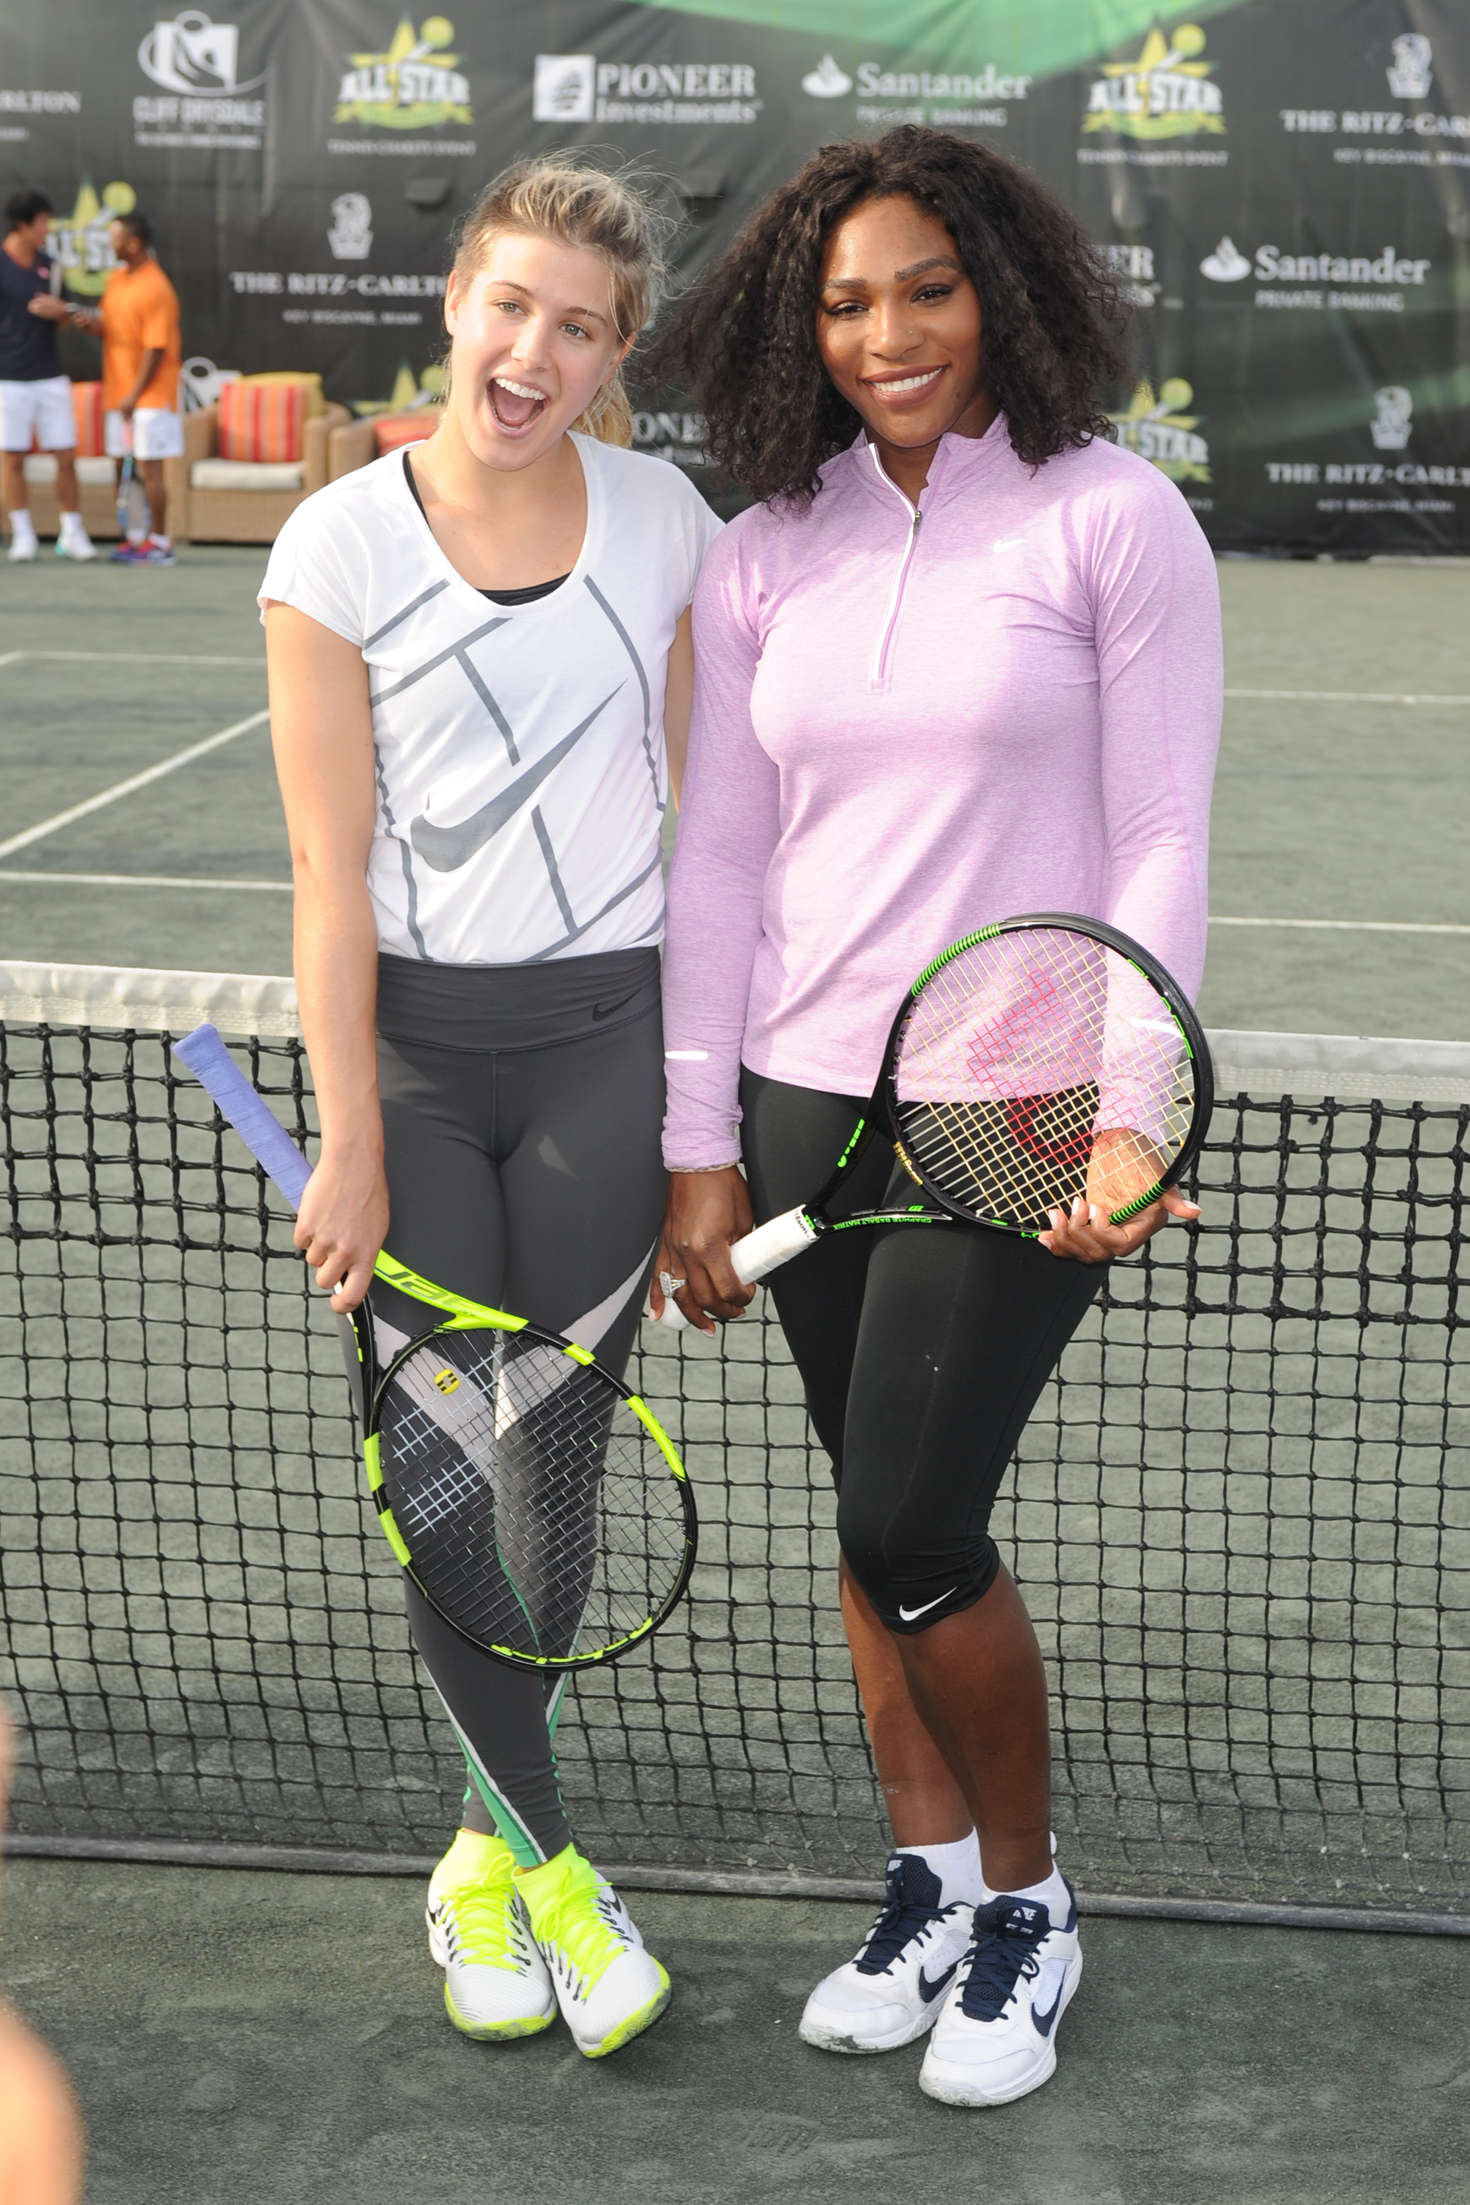 Eugenie Bouchard â€“ All Star Tennis Event at The Miami Open 2016 in Miami